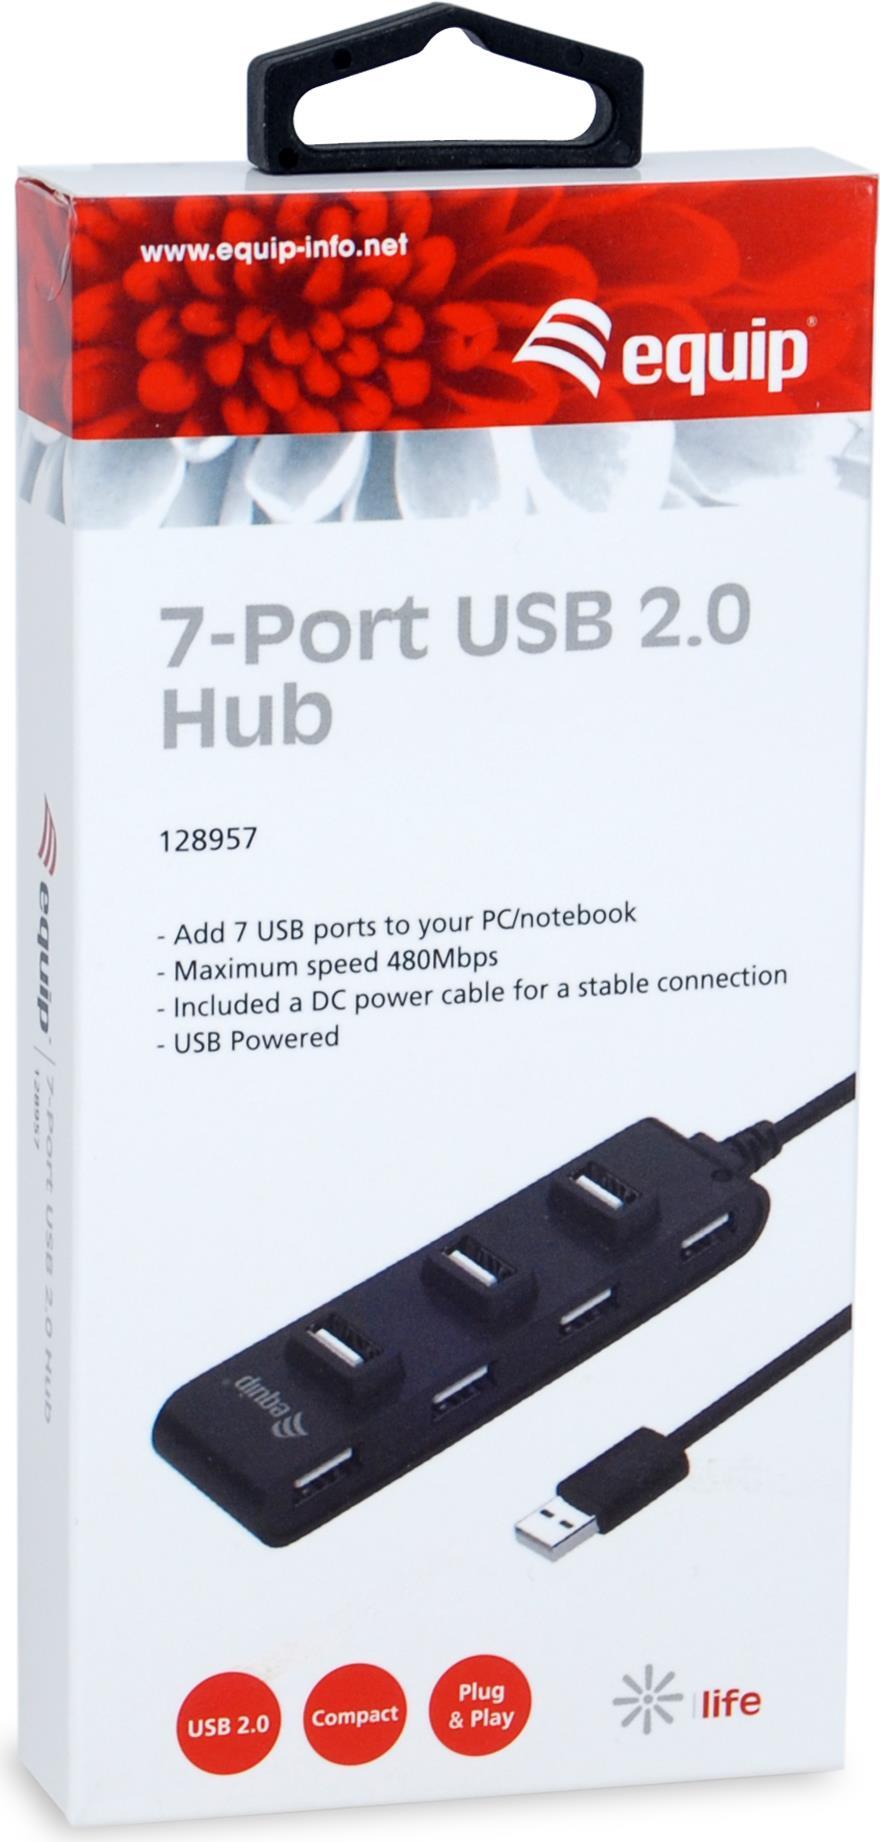 Equip 7 Port USB 2.0 Hub (128957)